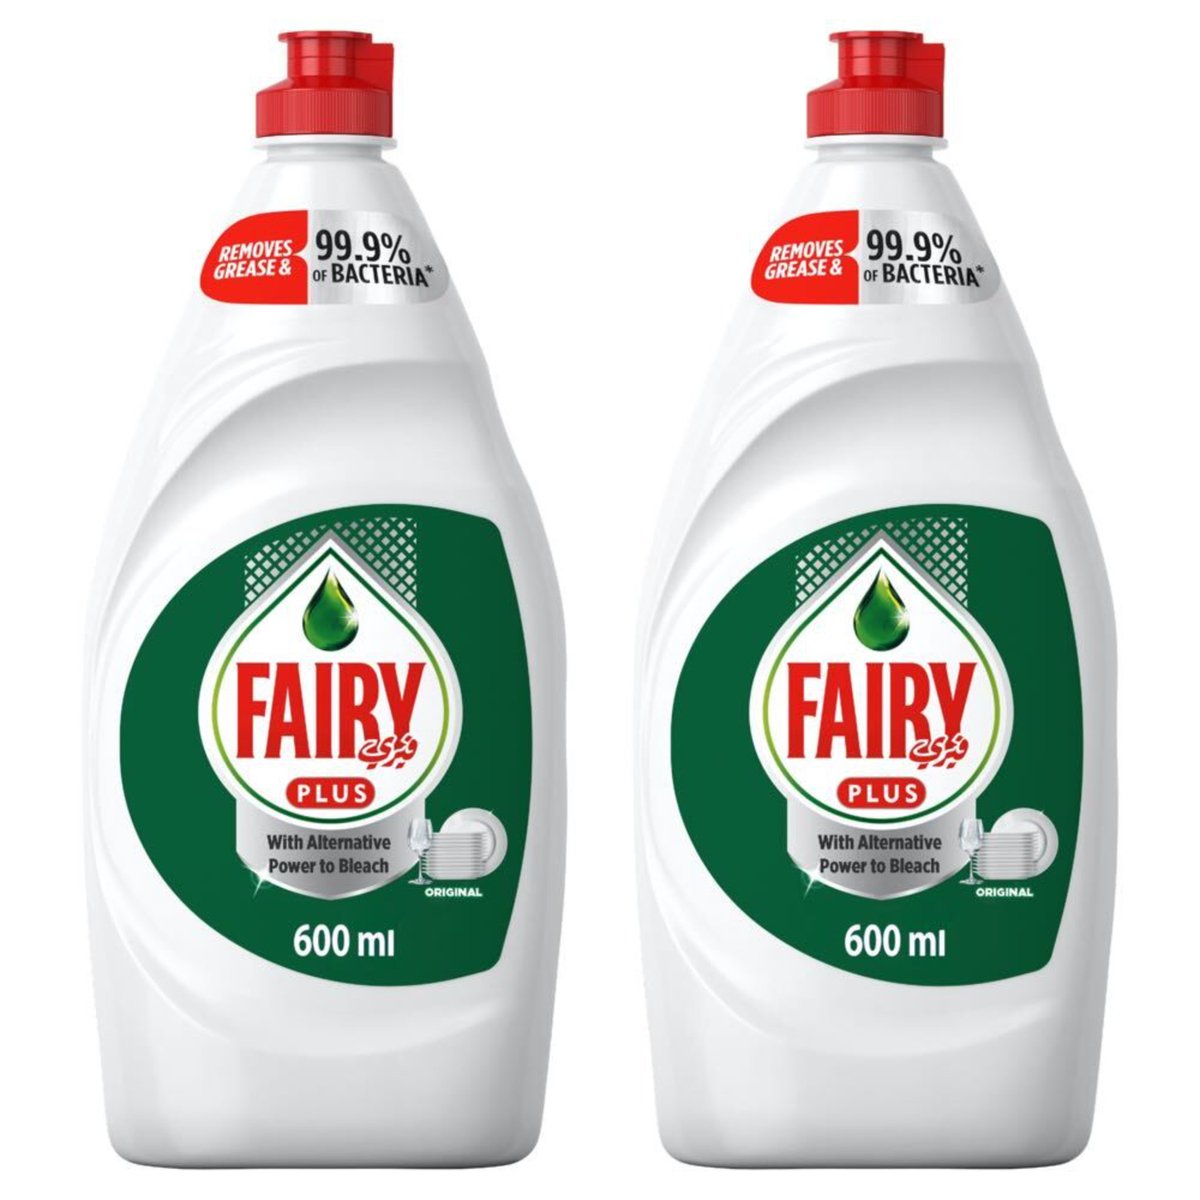 Fairy Plus Original Dishwashing Liquid Soap With Alternative Power To Bleach Value Pack 2 x 600 ml